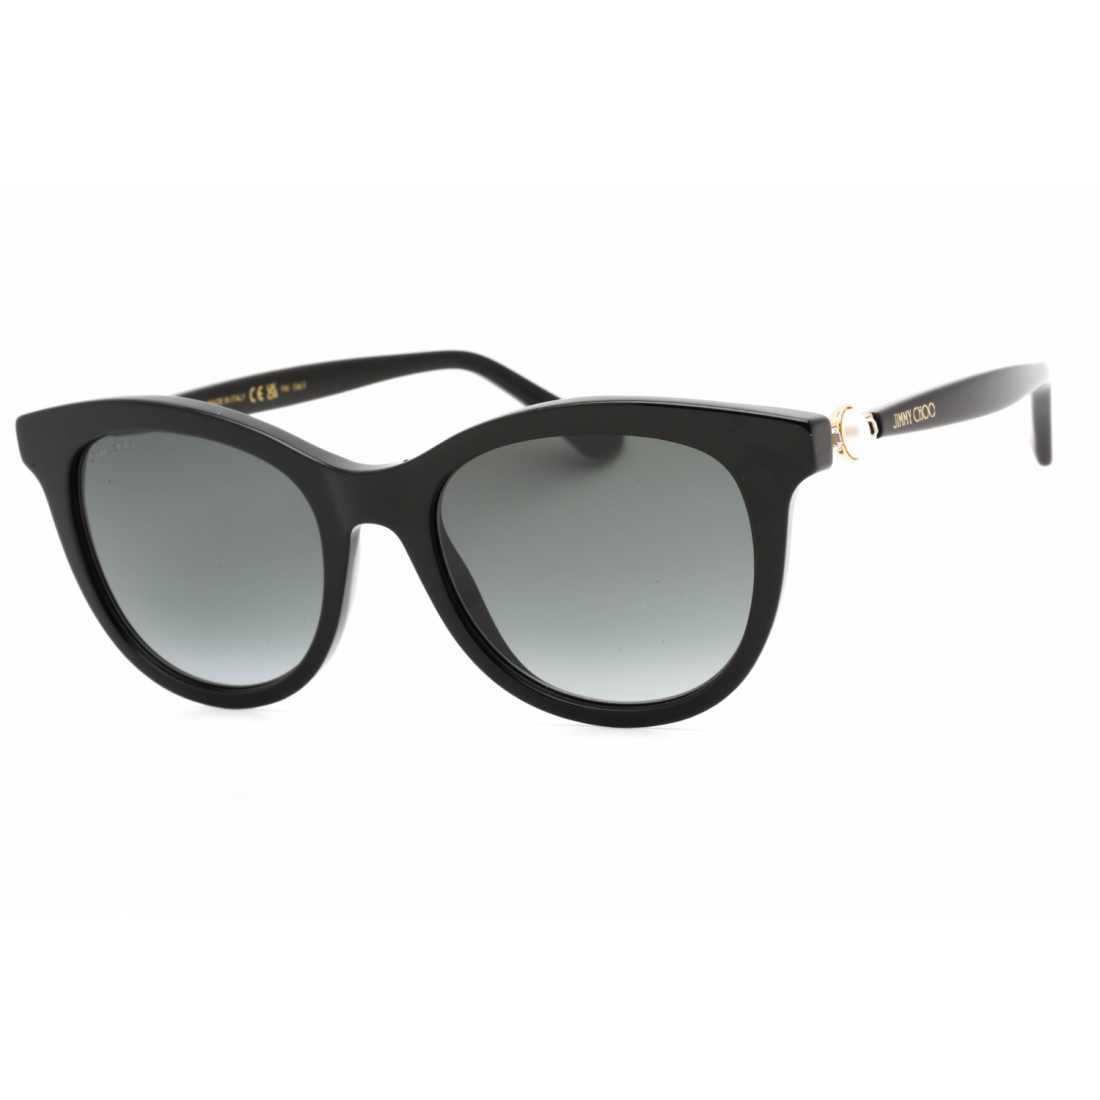 Women's 'ANNABETH/S 807 BLACK' Sunglasses